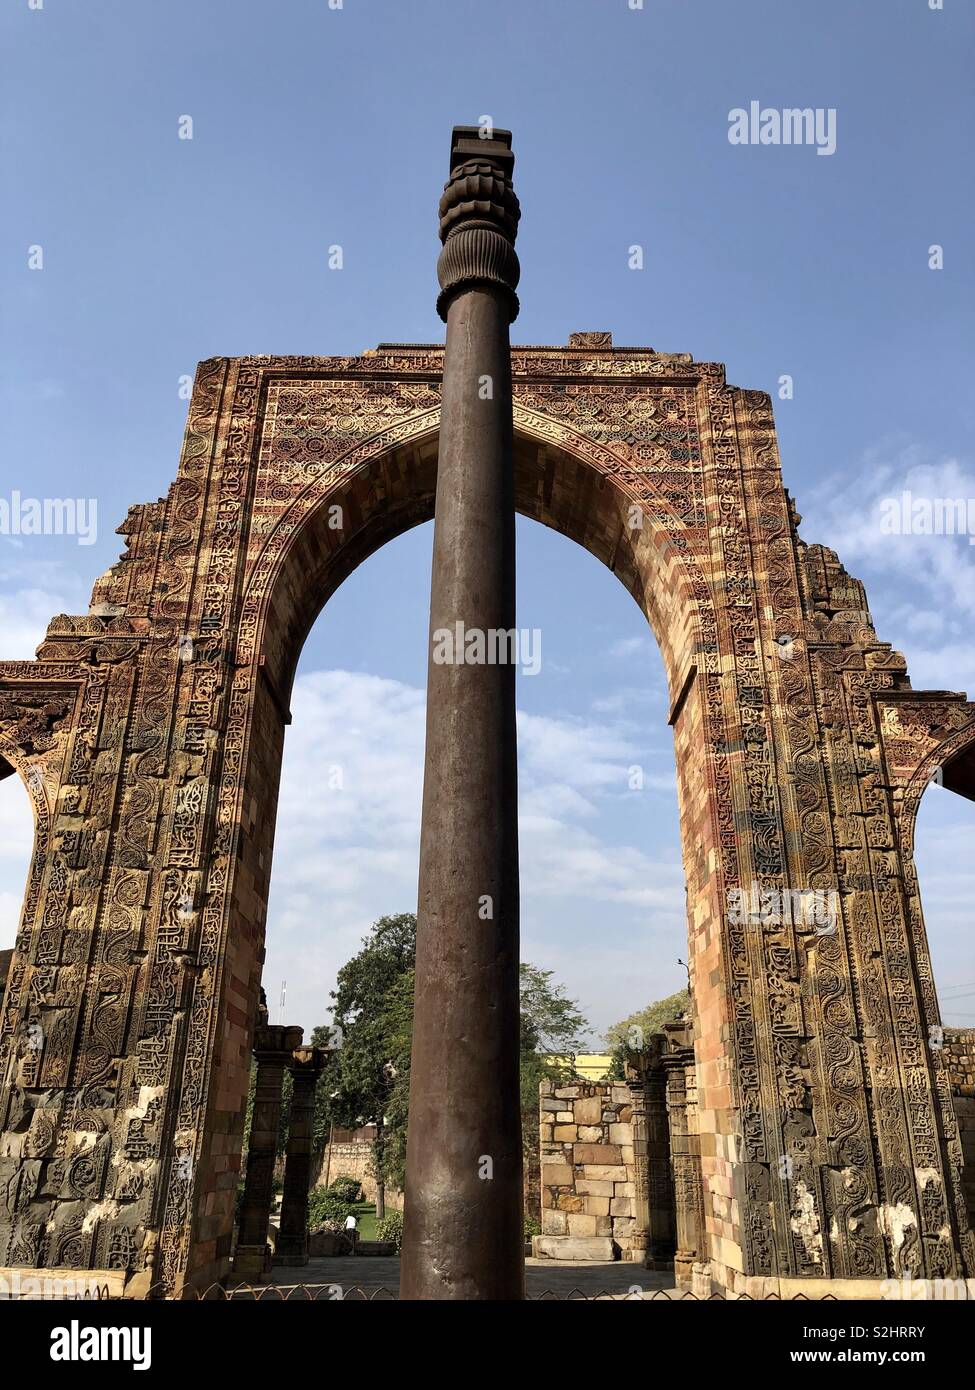 Iron pillar and arch at Qutub minar Compound Stock Photo